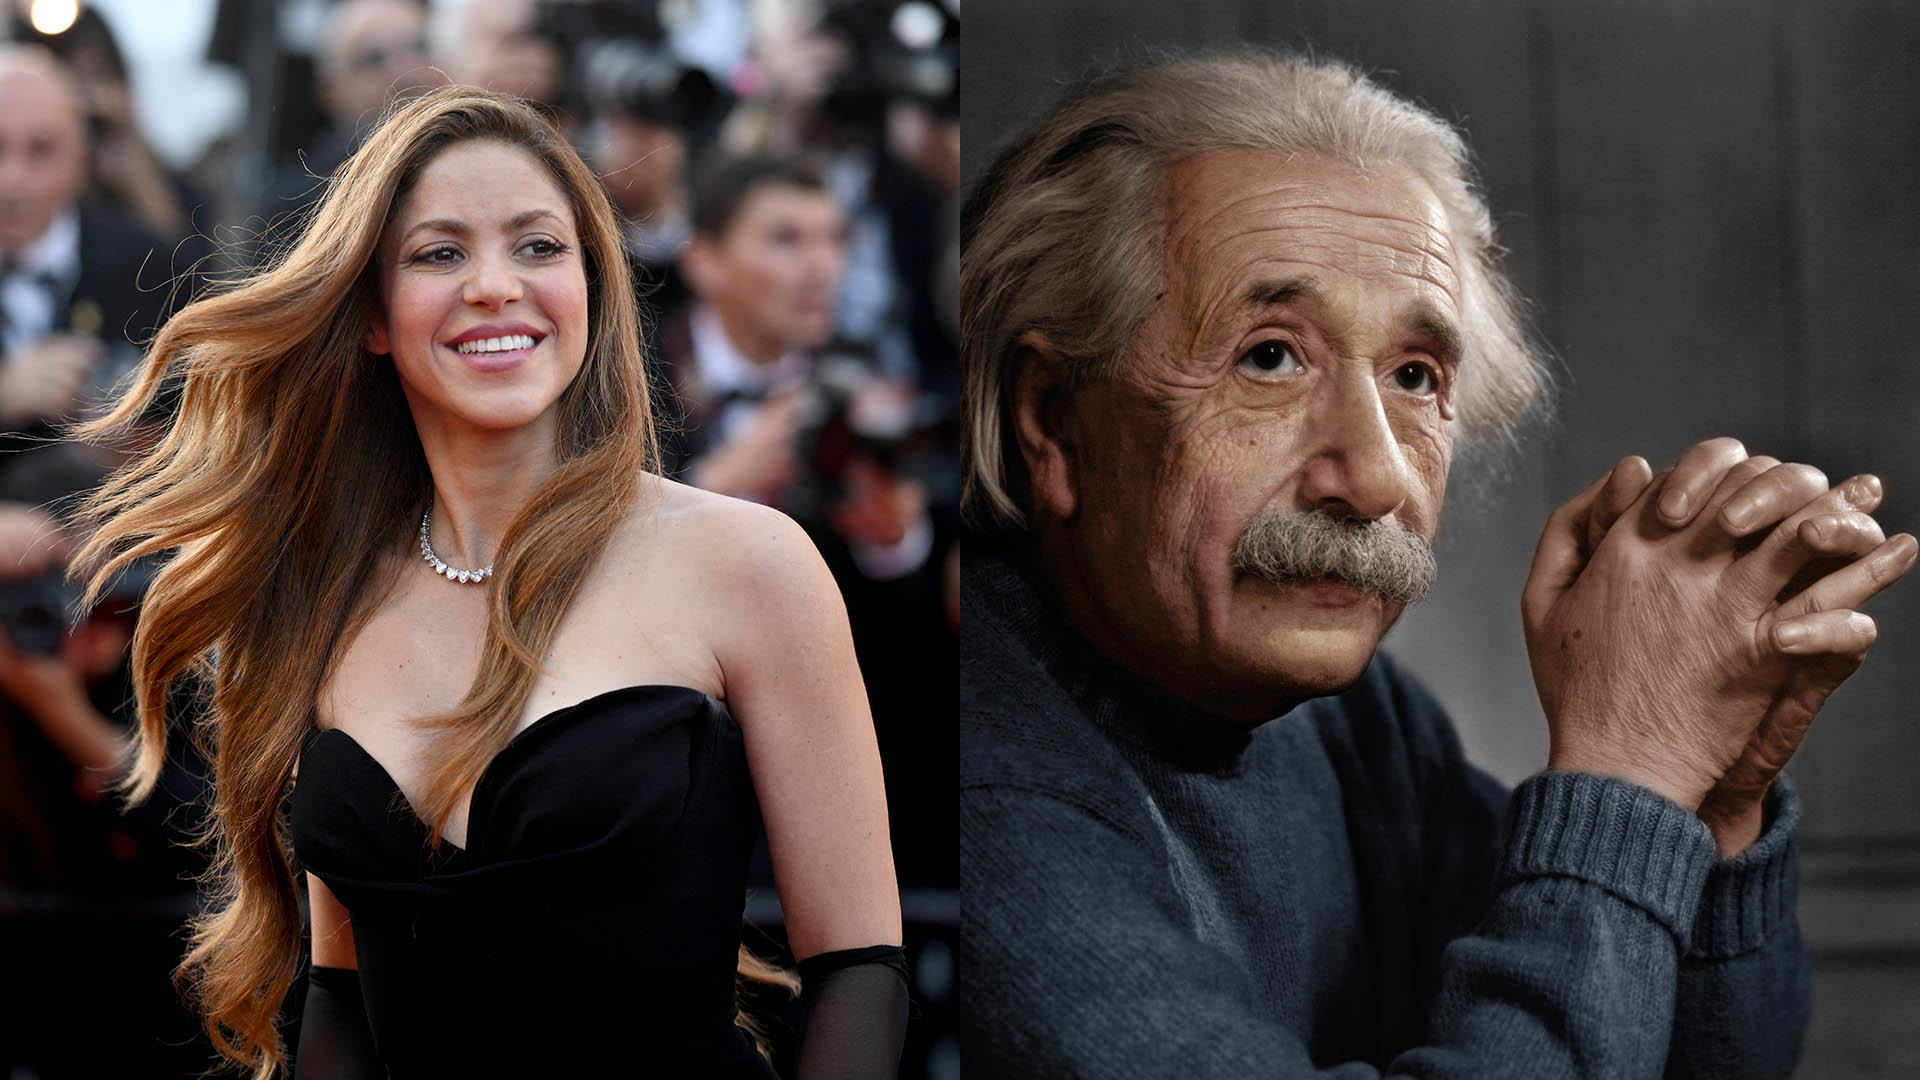 Shakira a la izquierda y Albert Einstein a la derecha 